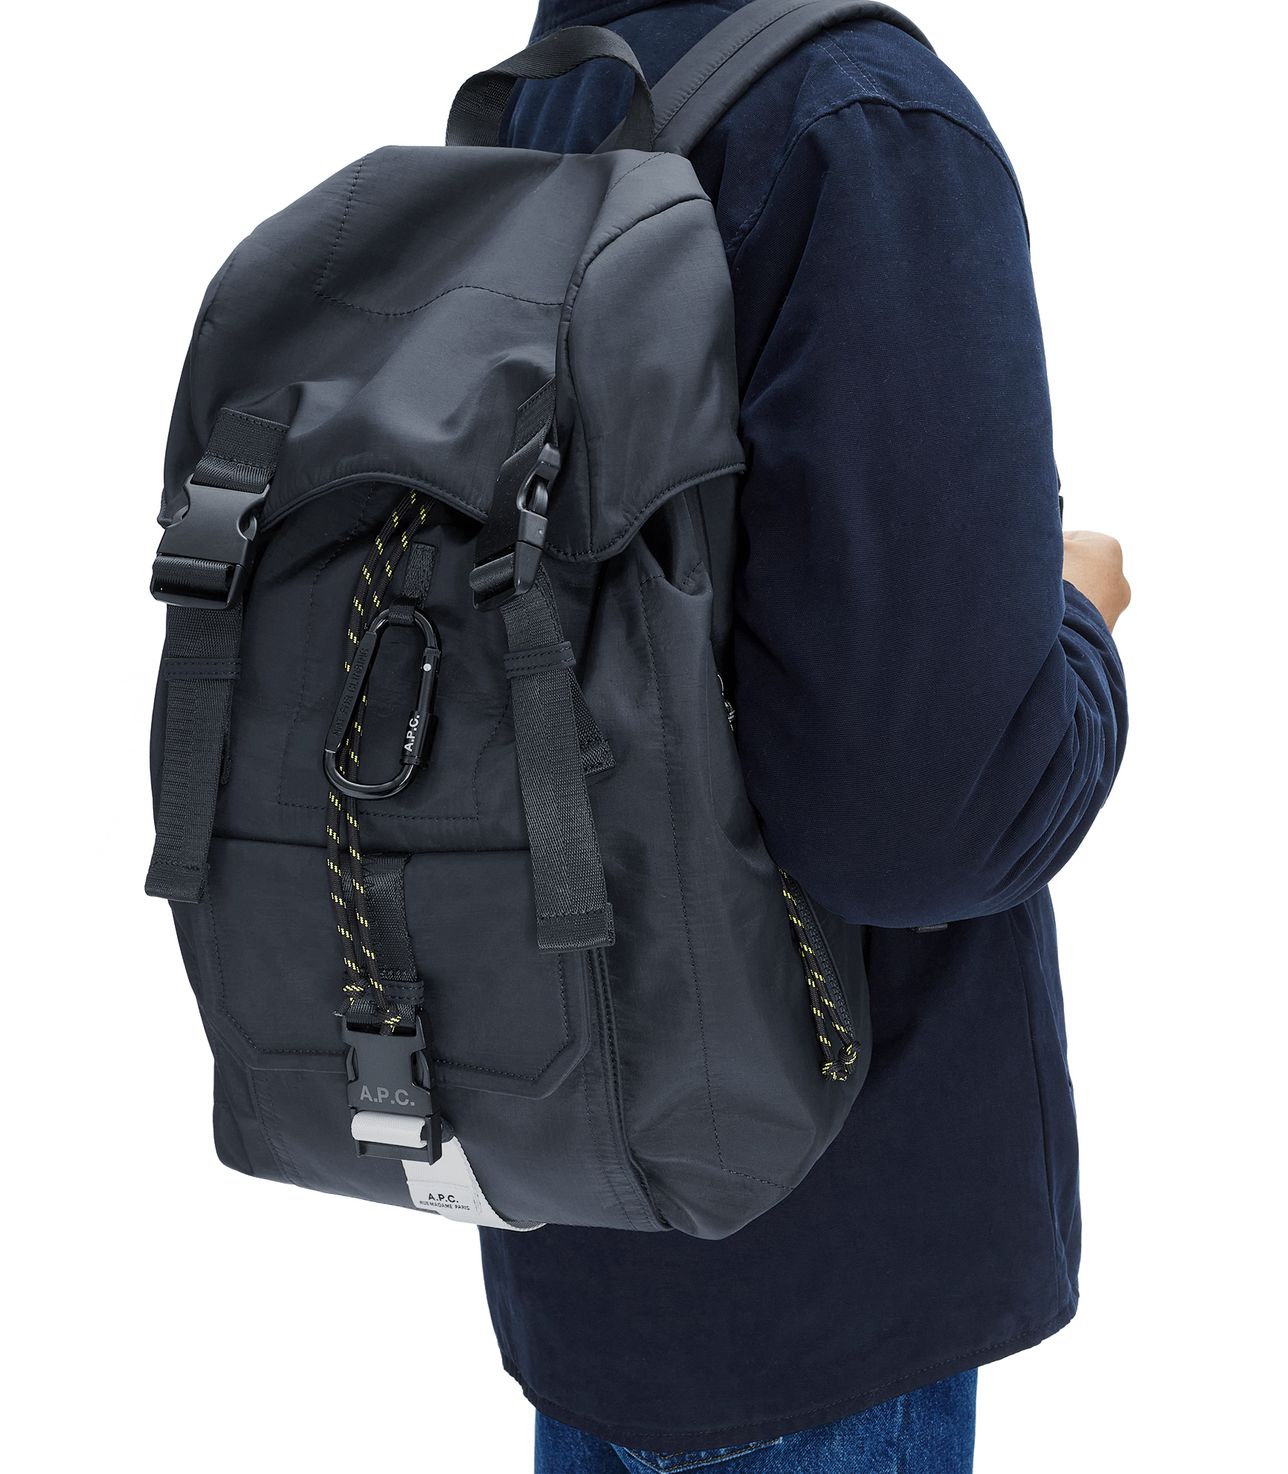 Trek backpack DARK NAVY BLUE APC